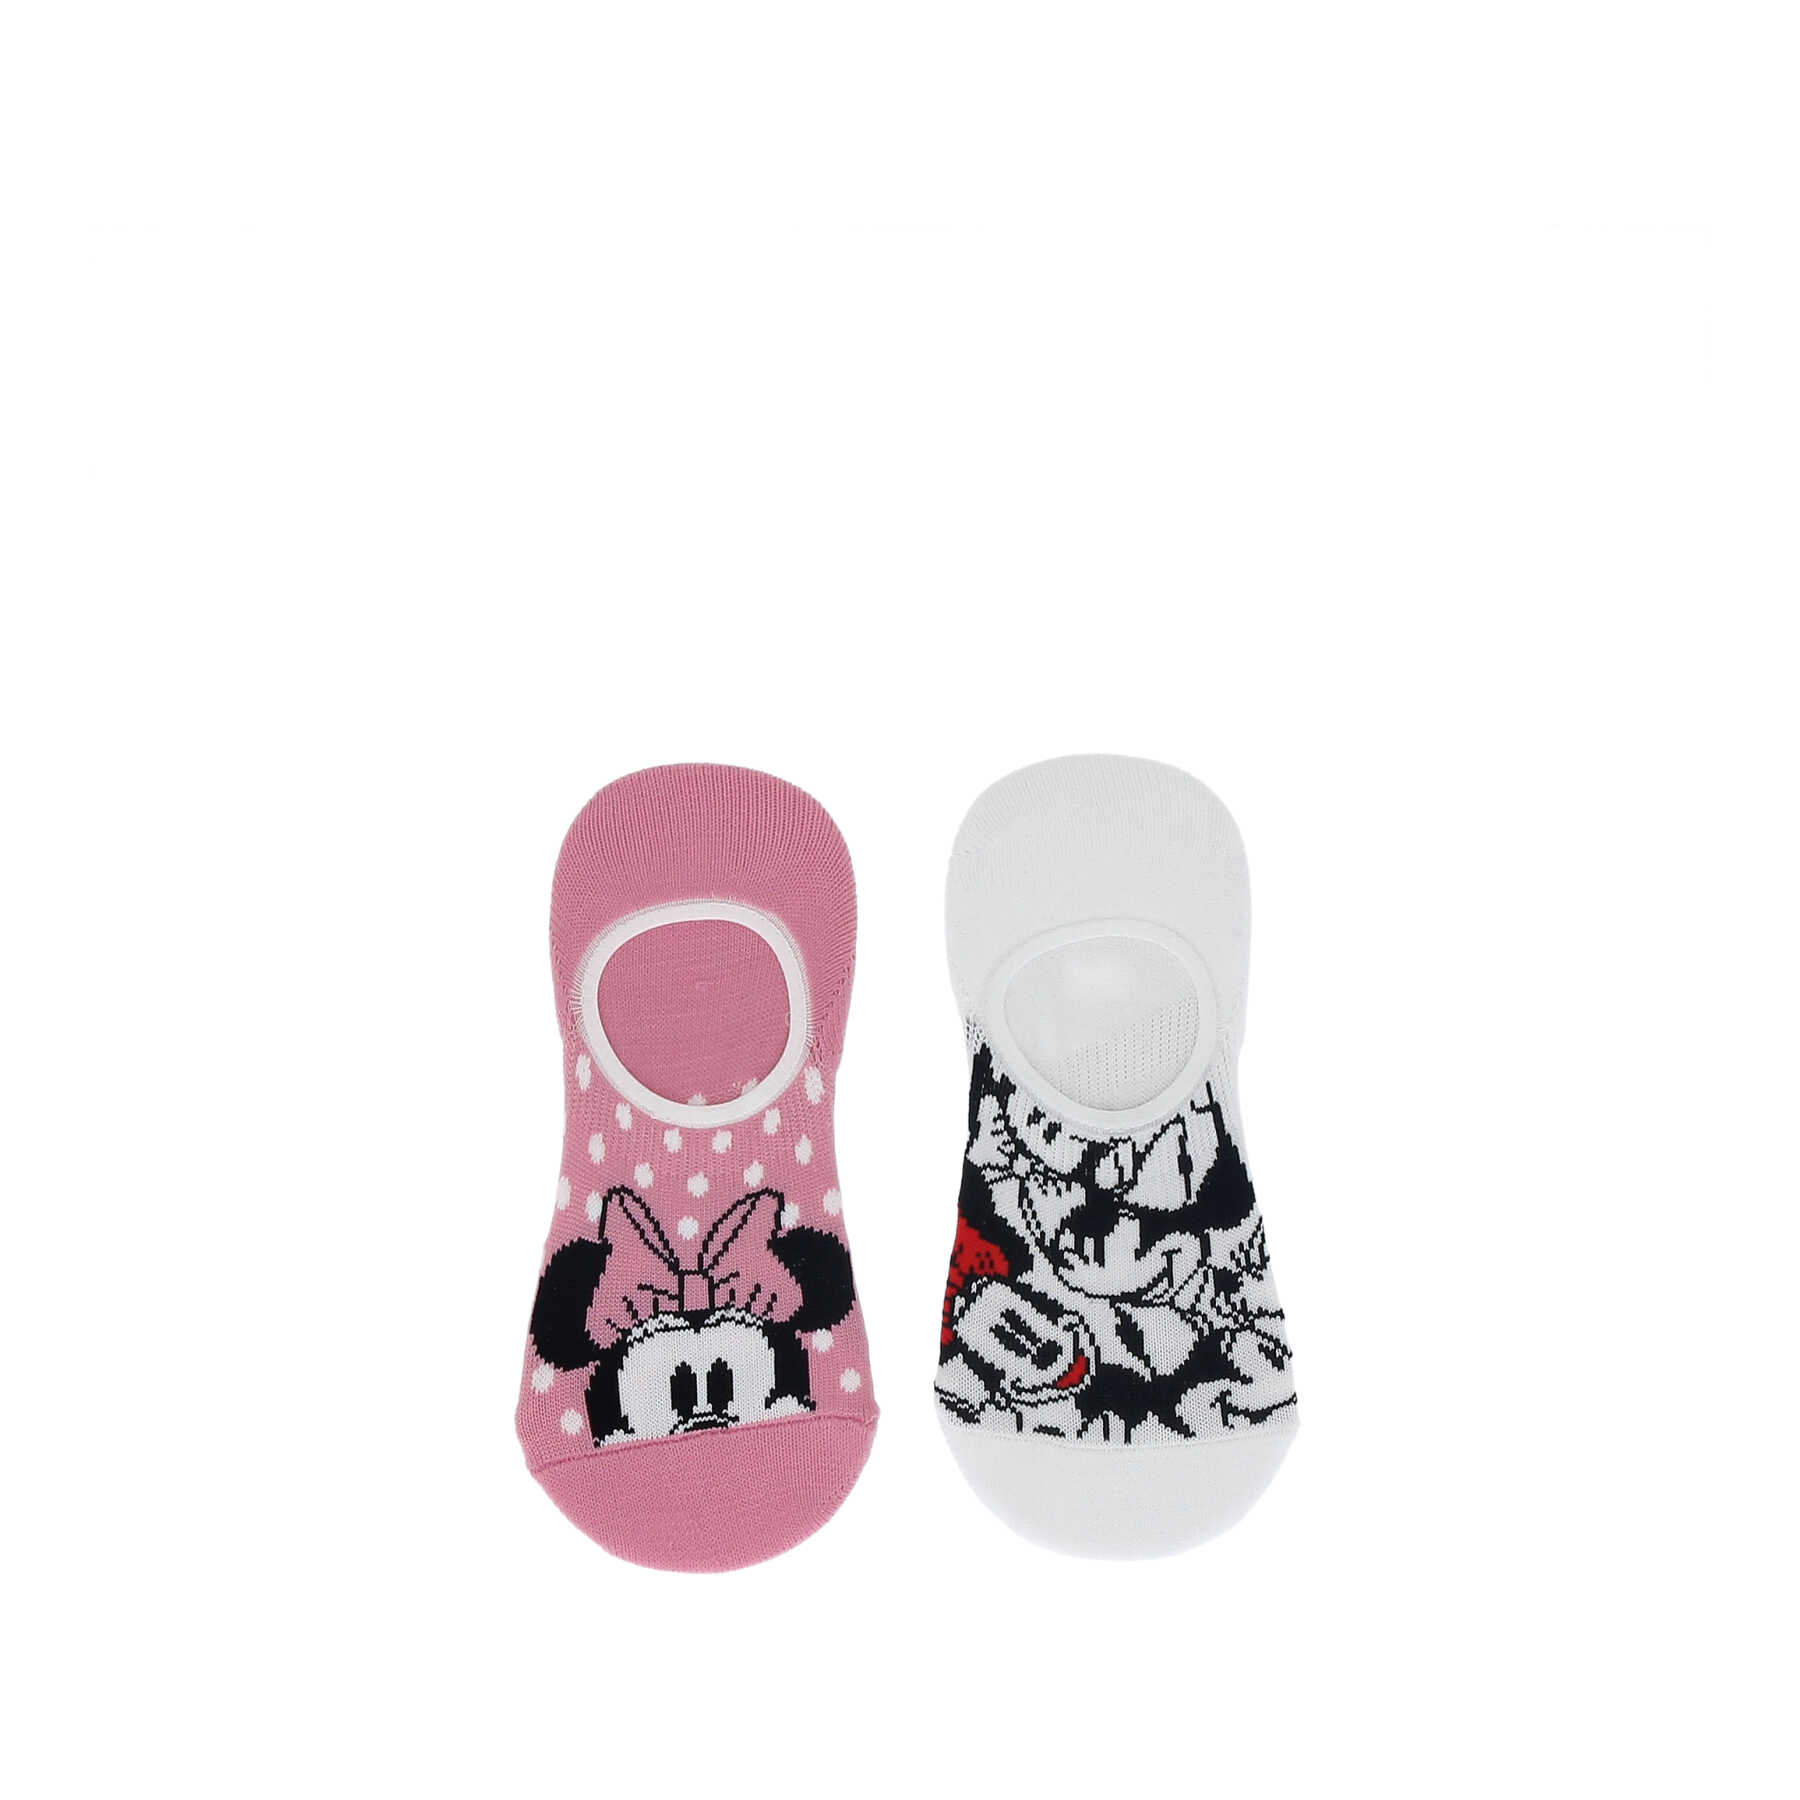 Dívčí ponožky Minnie do tenisek sneakers - 2-pack - růžové a bílé